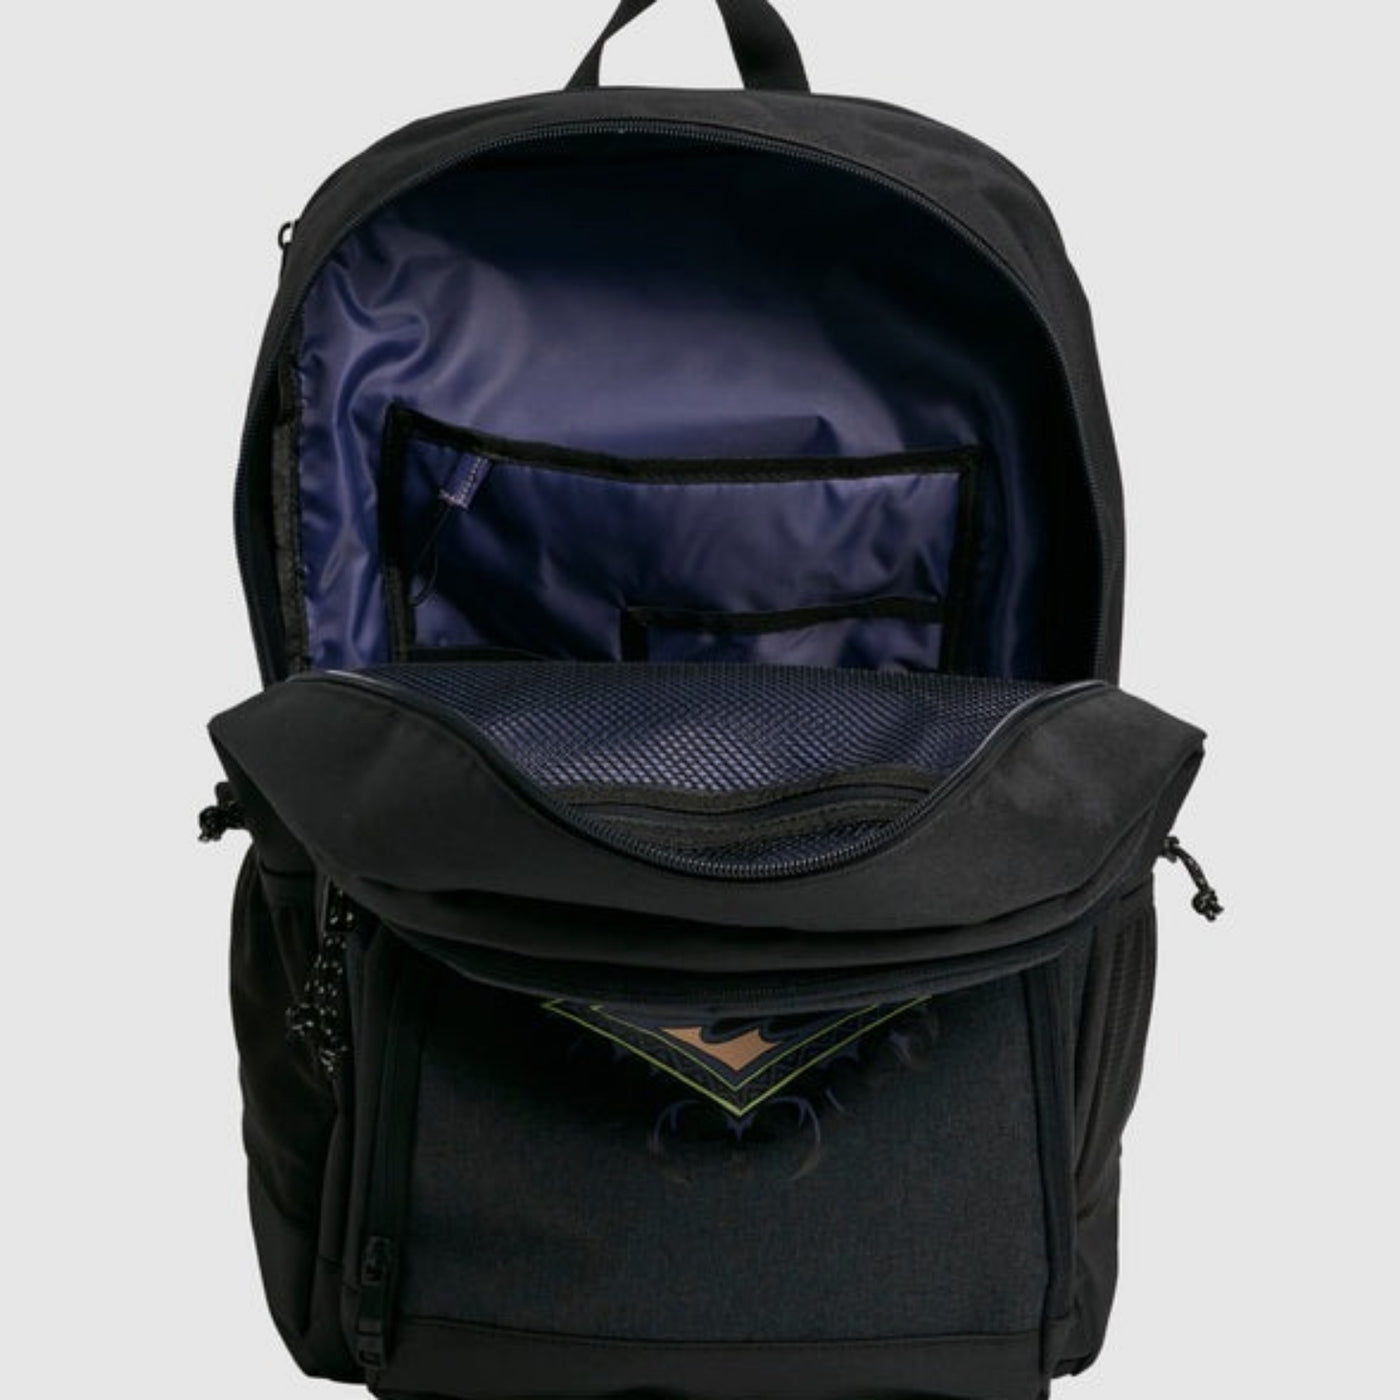 Billabong Command 29L Backpack - Dark Charcoal